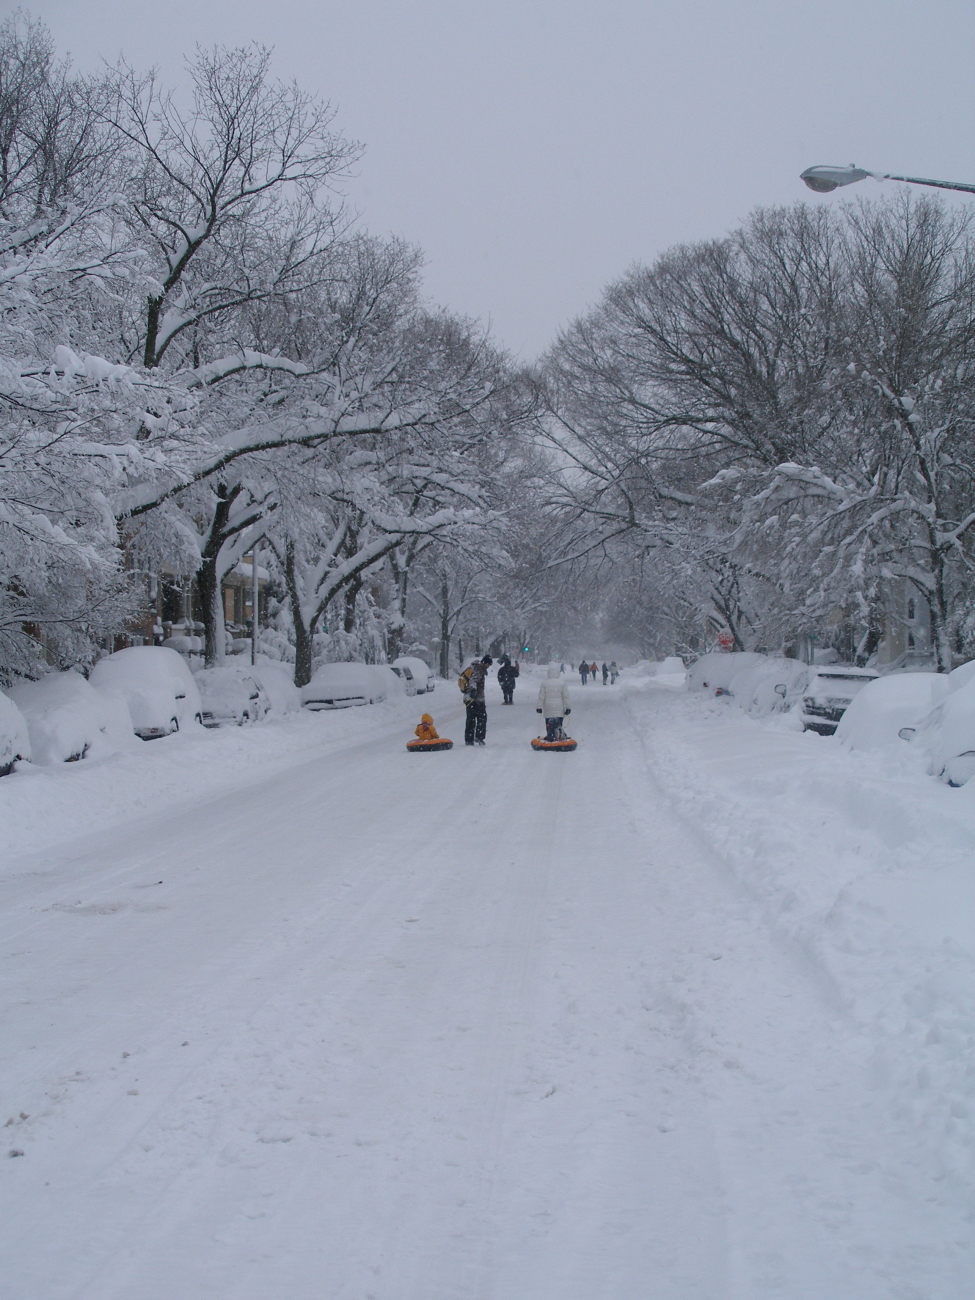 A street scene following second major snowstorm of 2009/2010 season